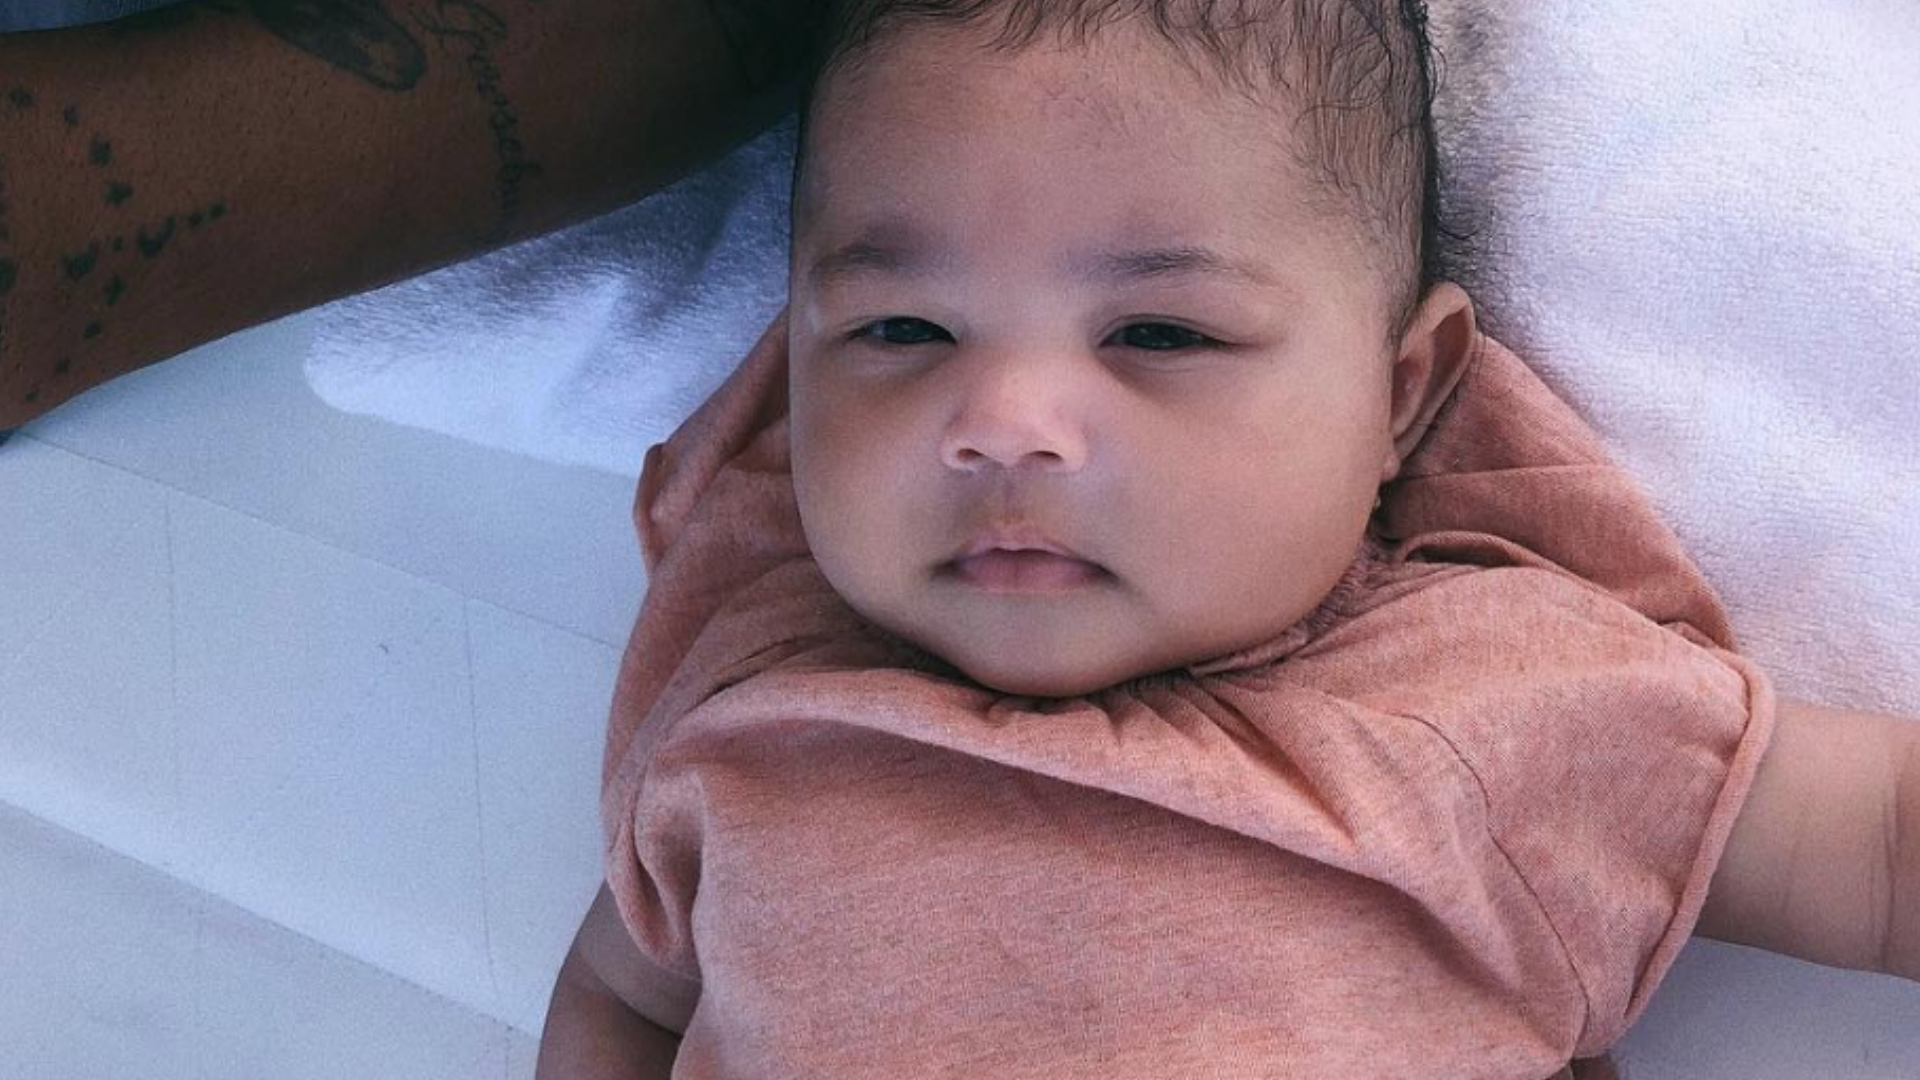 Kim Kardashian Buys Louis Vuitton Purses for Family Babies